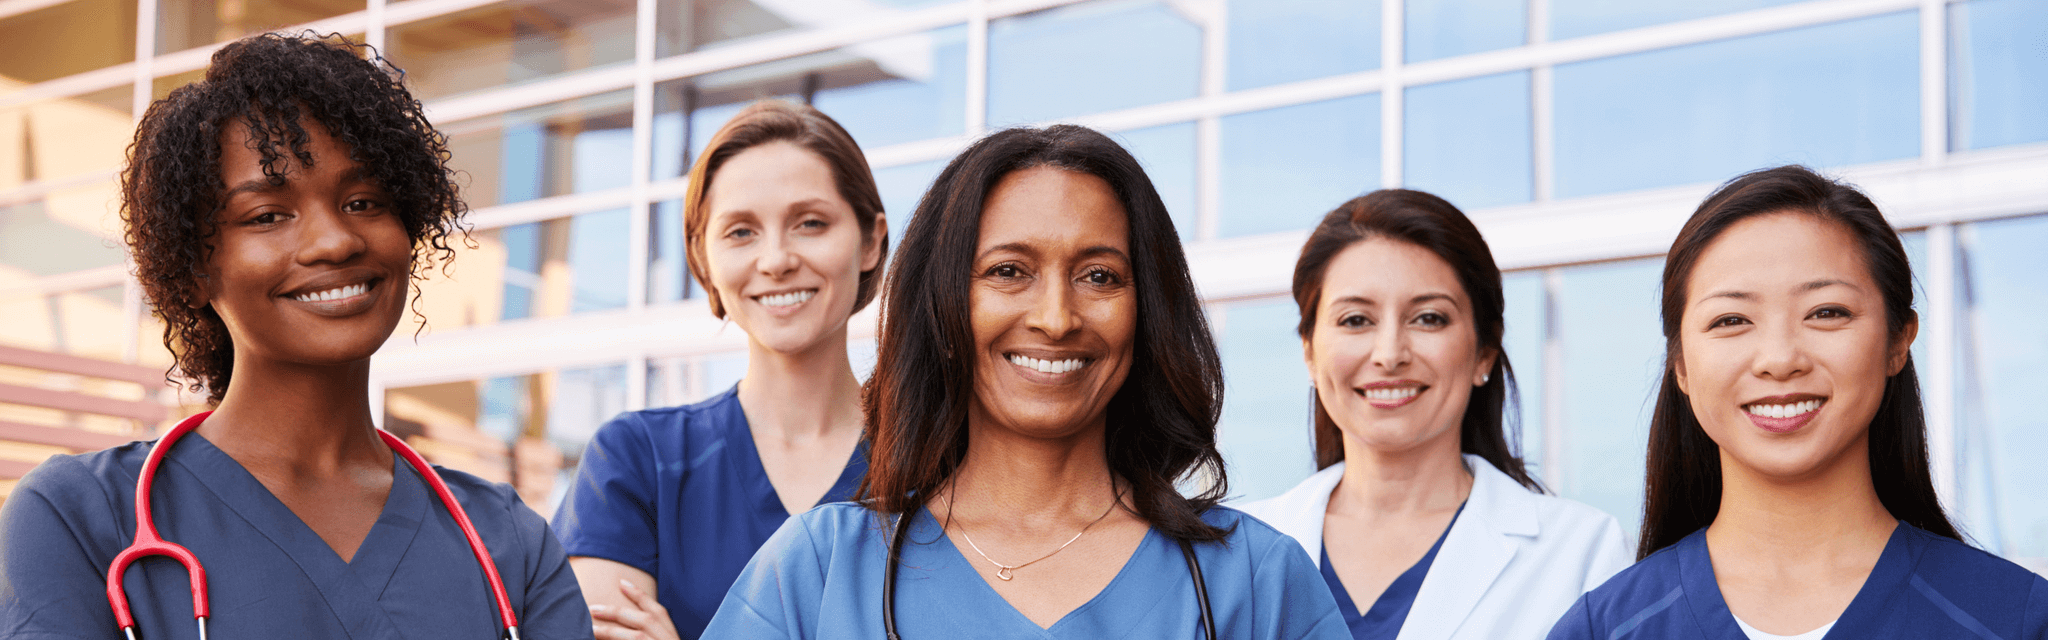 Five nurses standing together outside